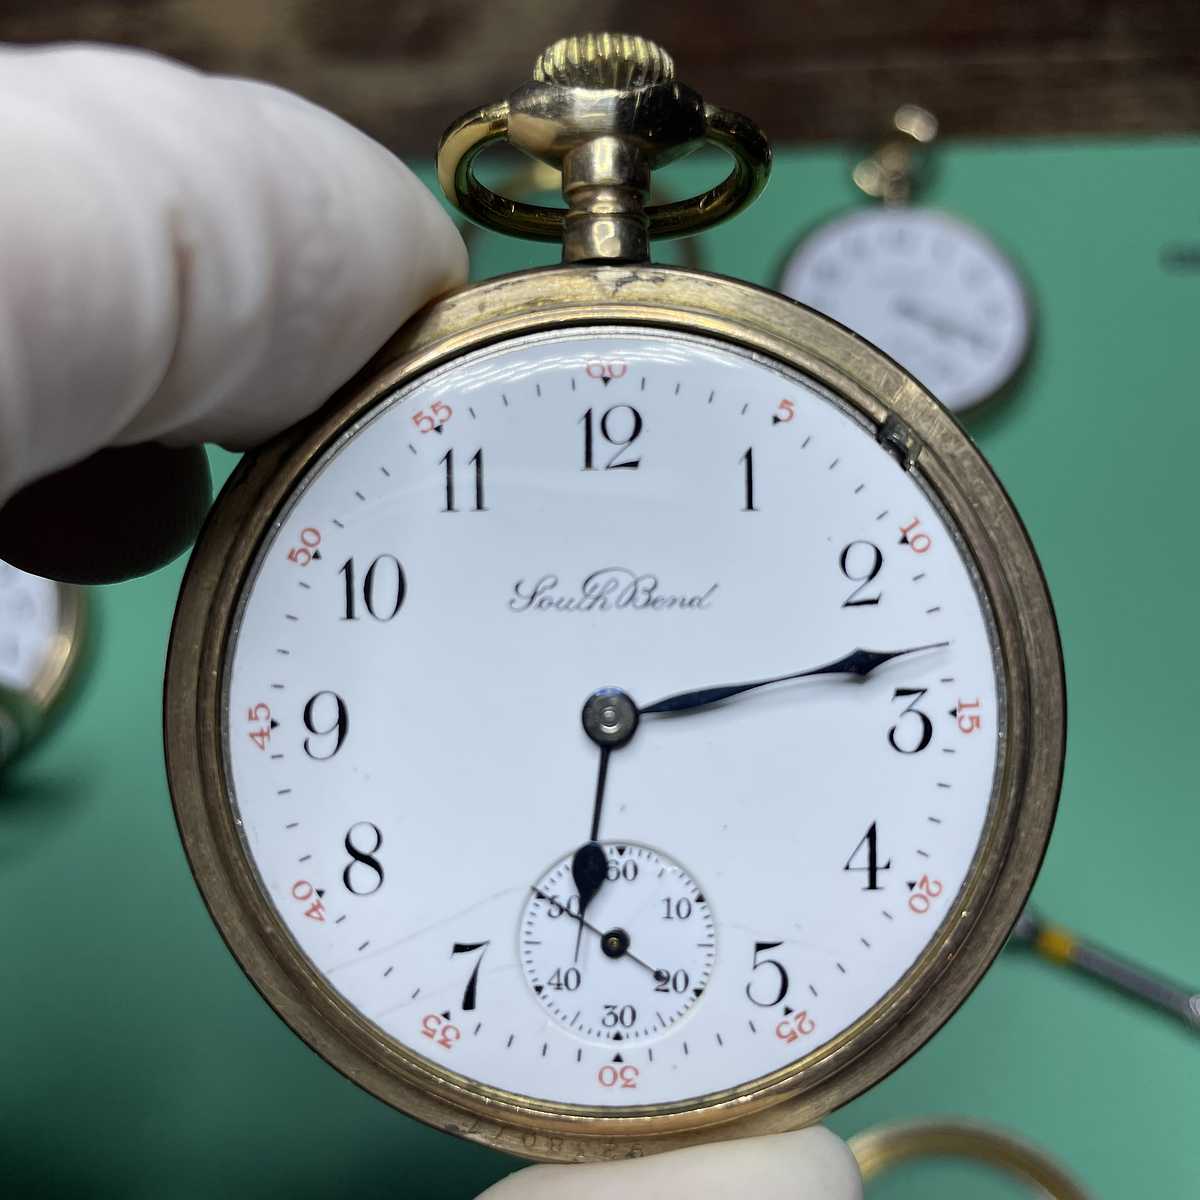 1919 South Bend Watch Grade 227 Dial in pocket watch case